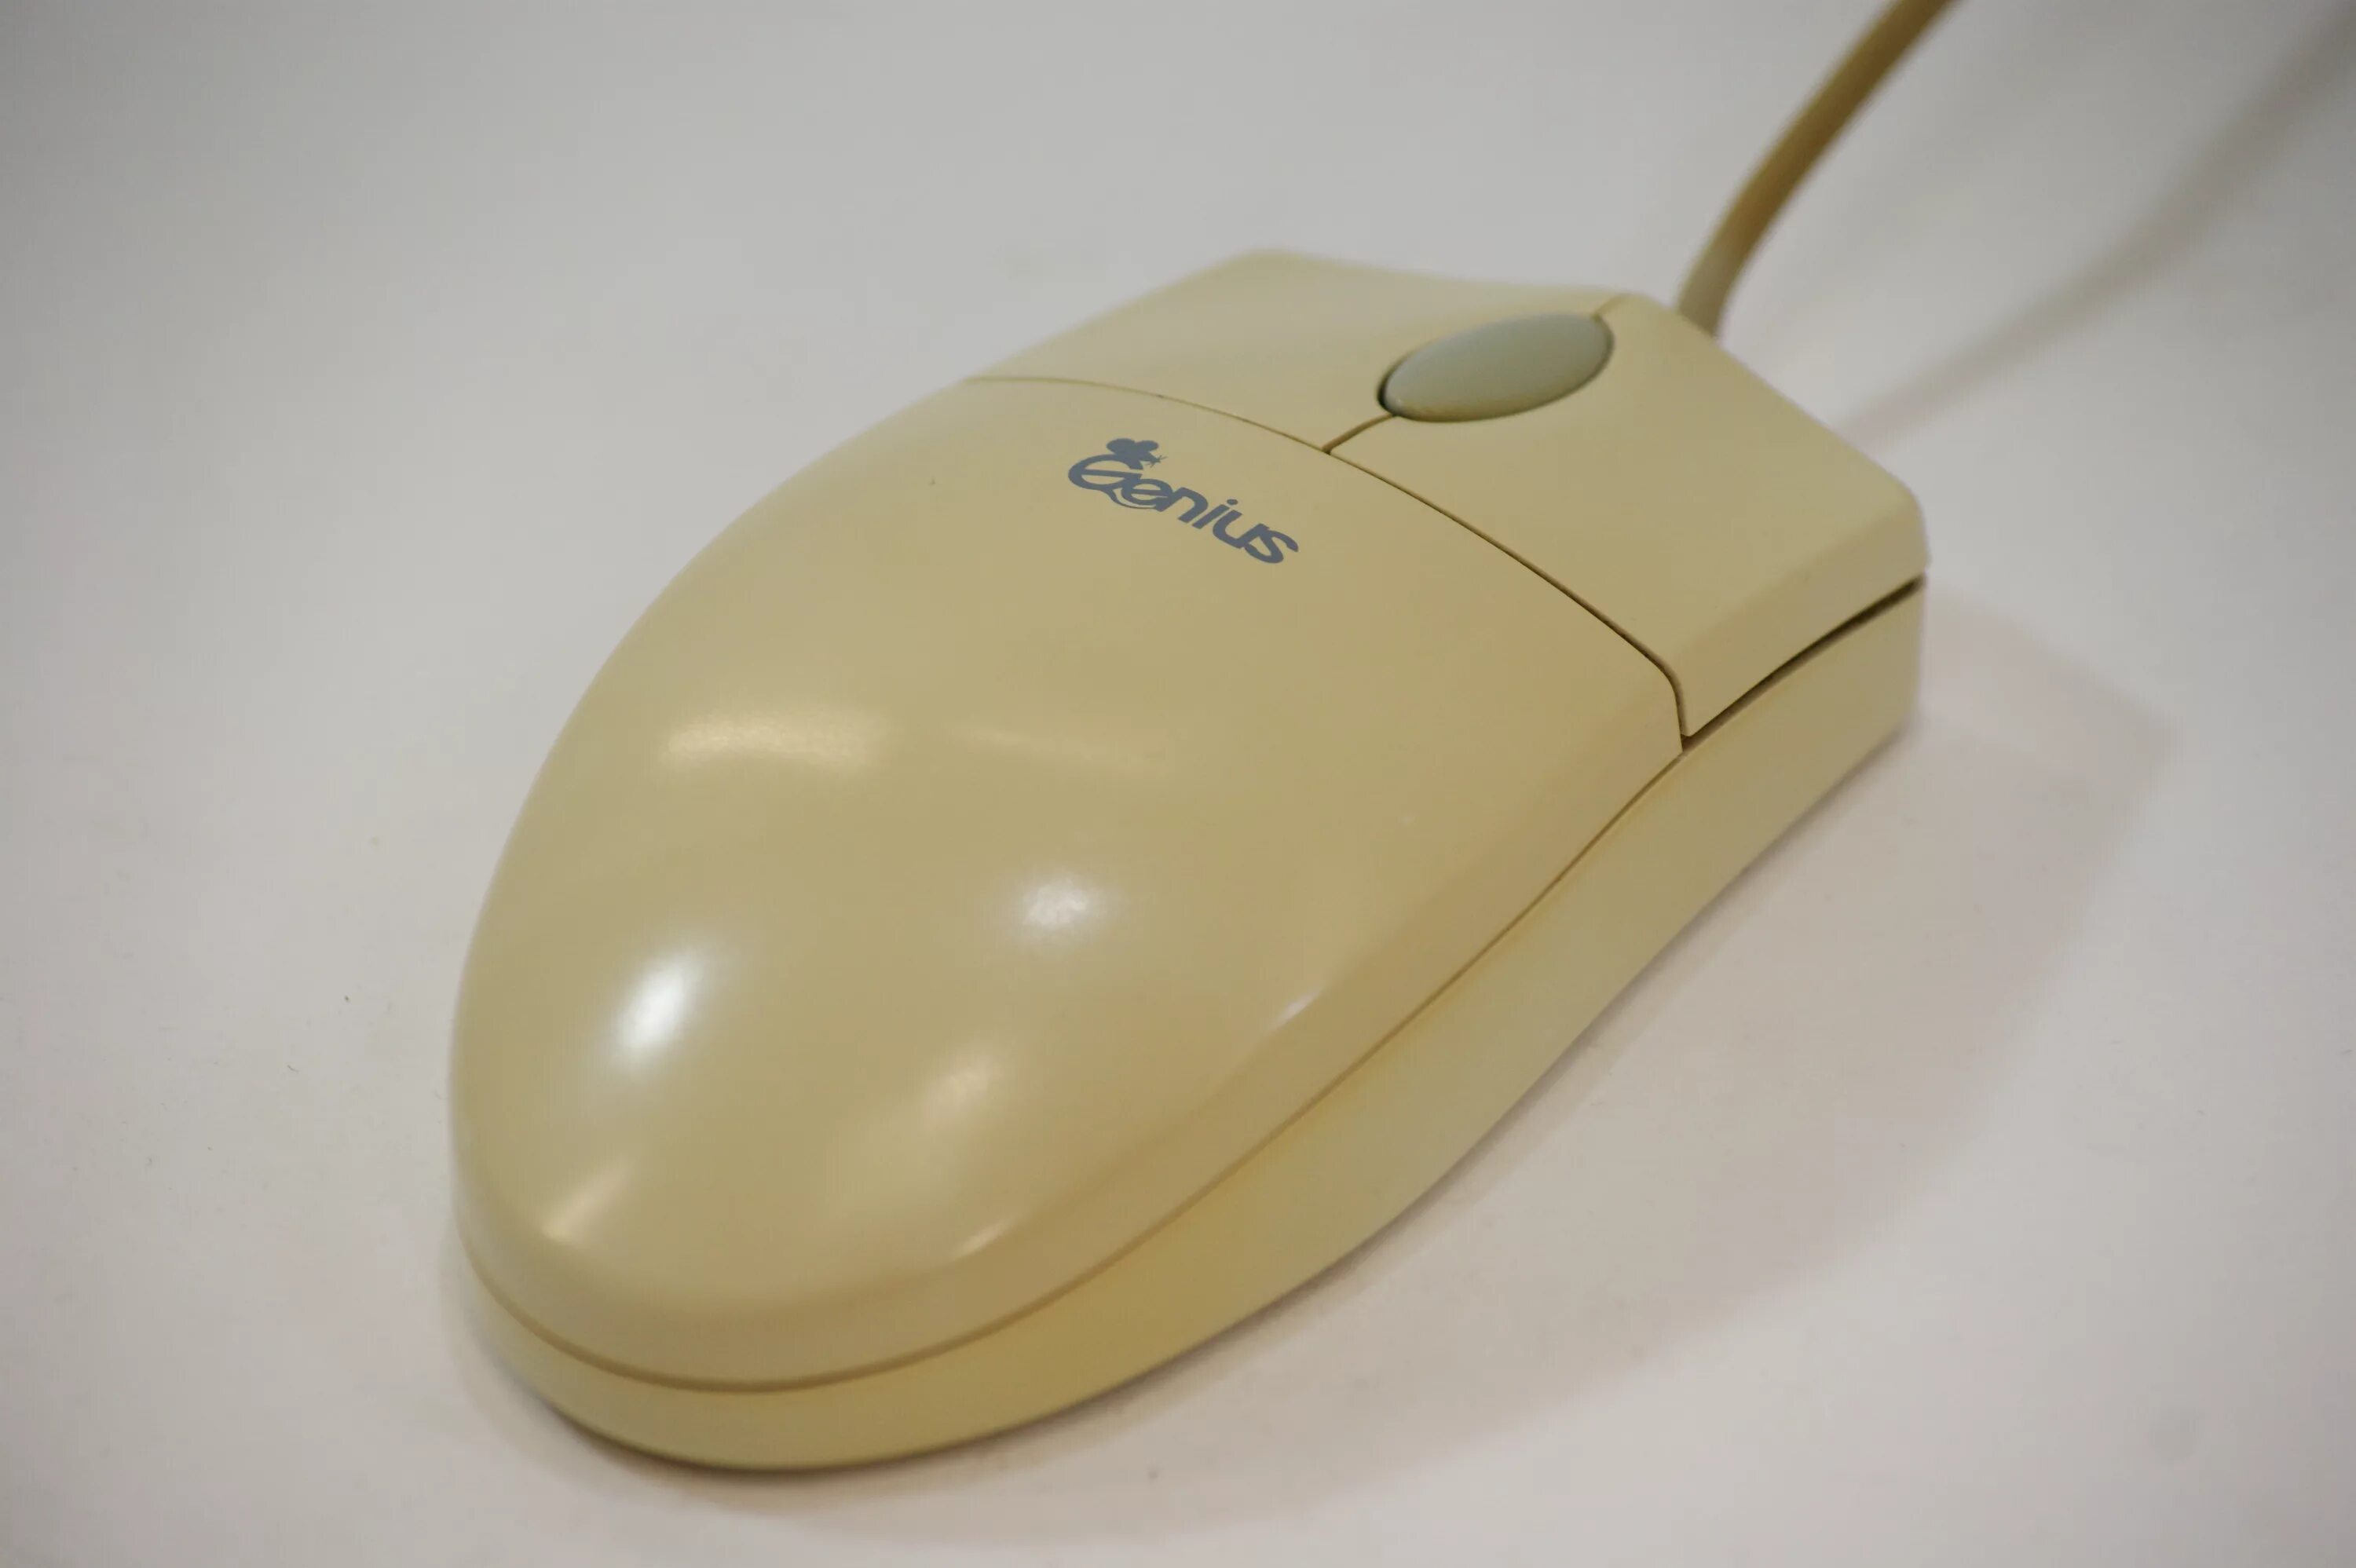 Мышь 80. Мышка Crown CMM-128. Компьютерная мышь INTELLIMOUSE 90. Genius мышка 2001. Genius мышь 1995.